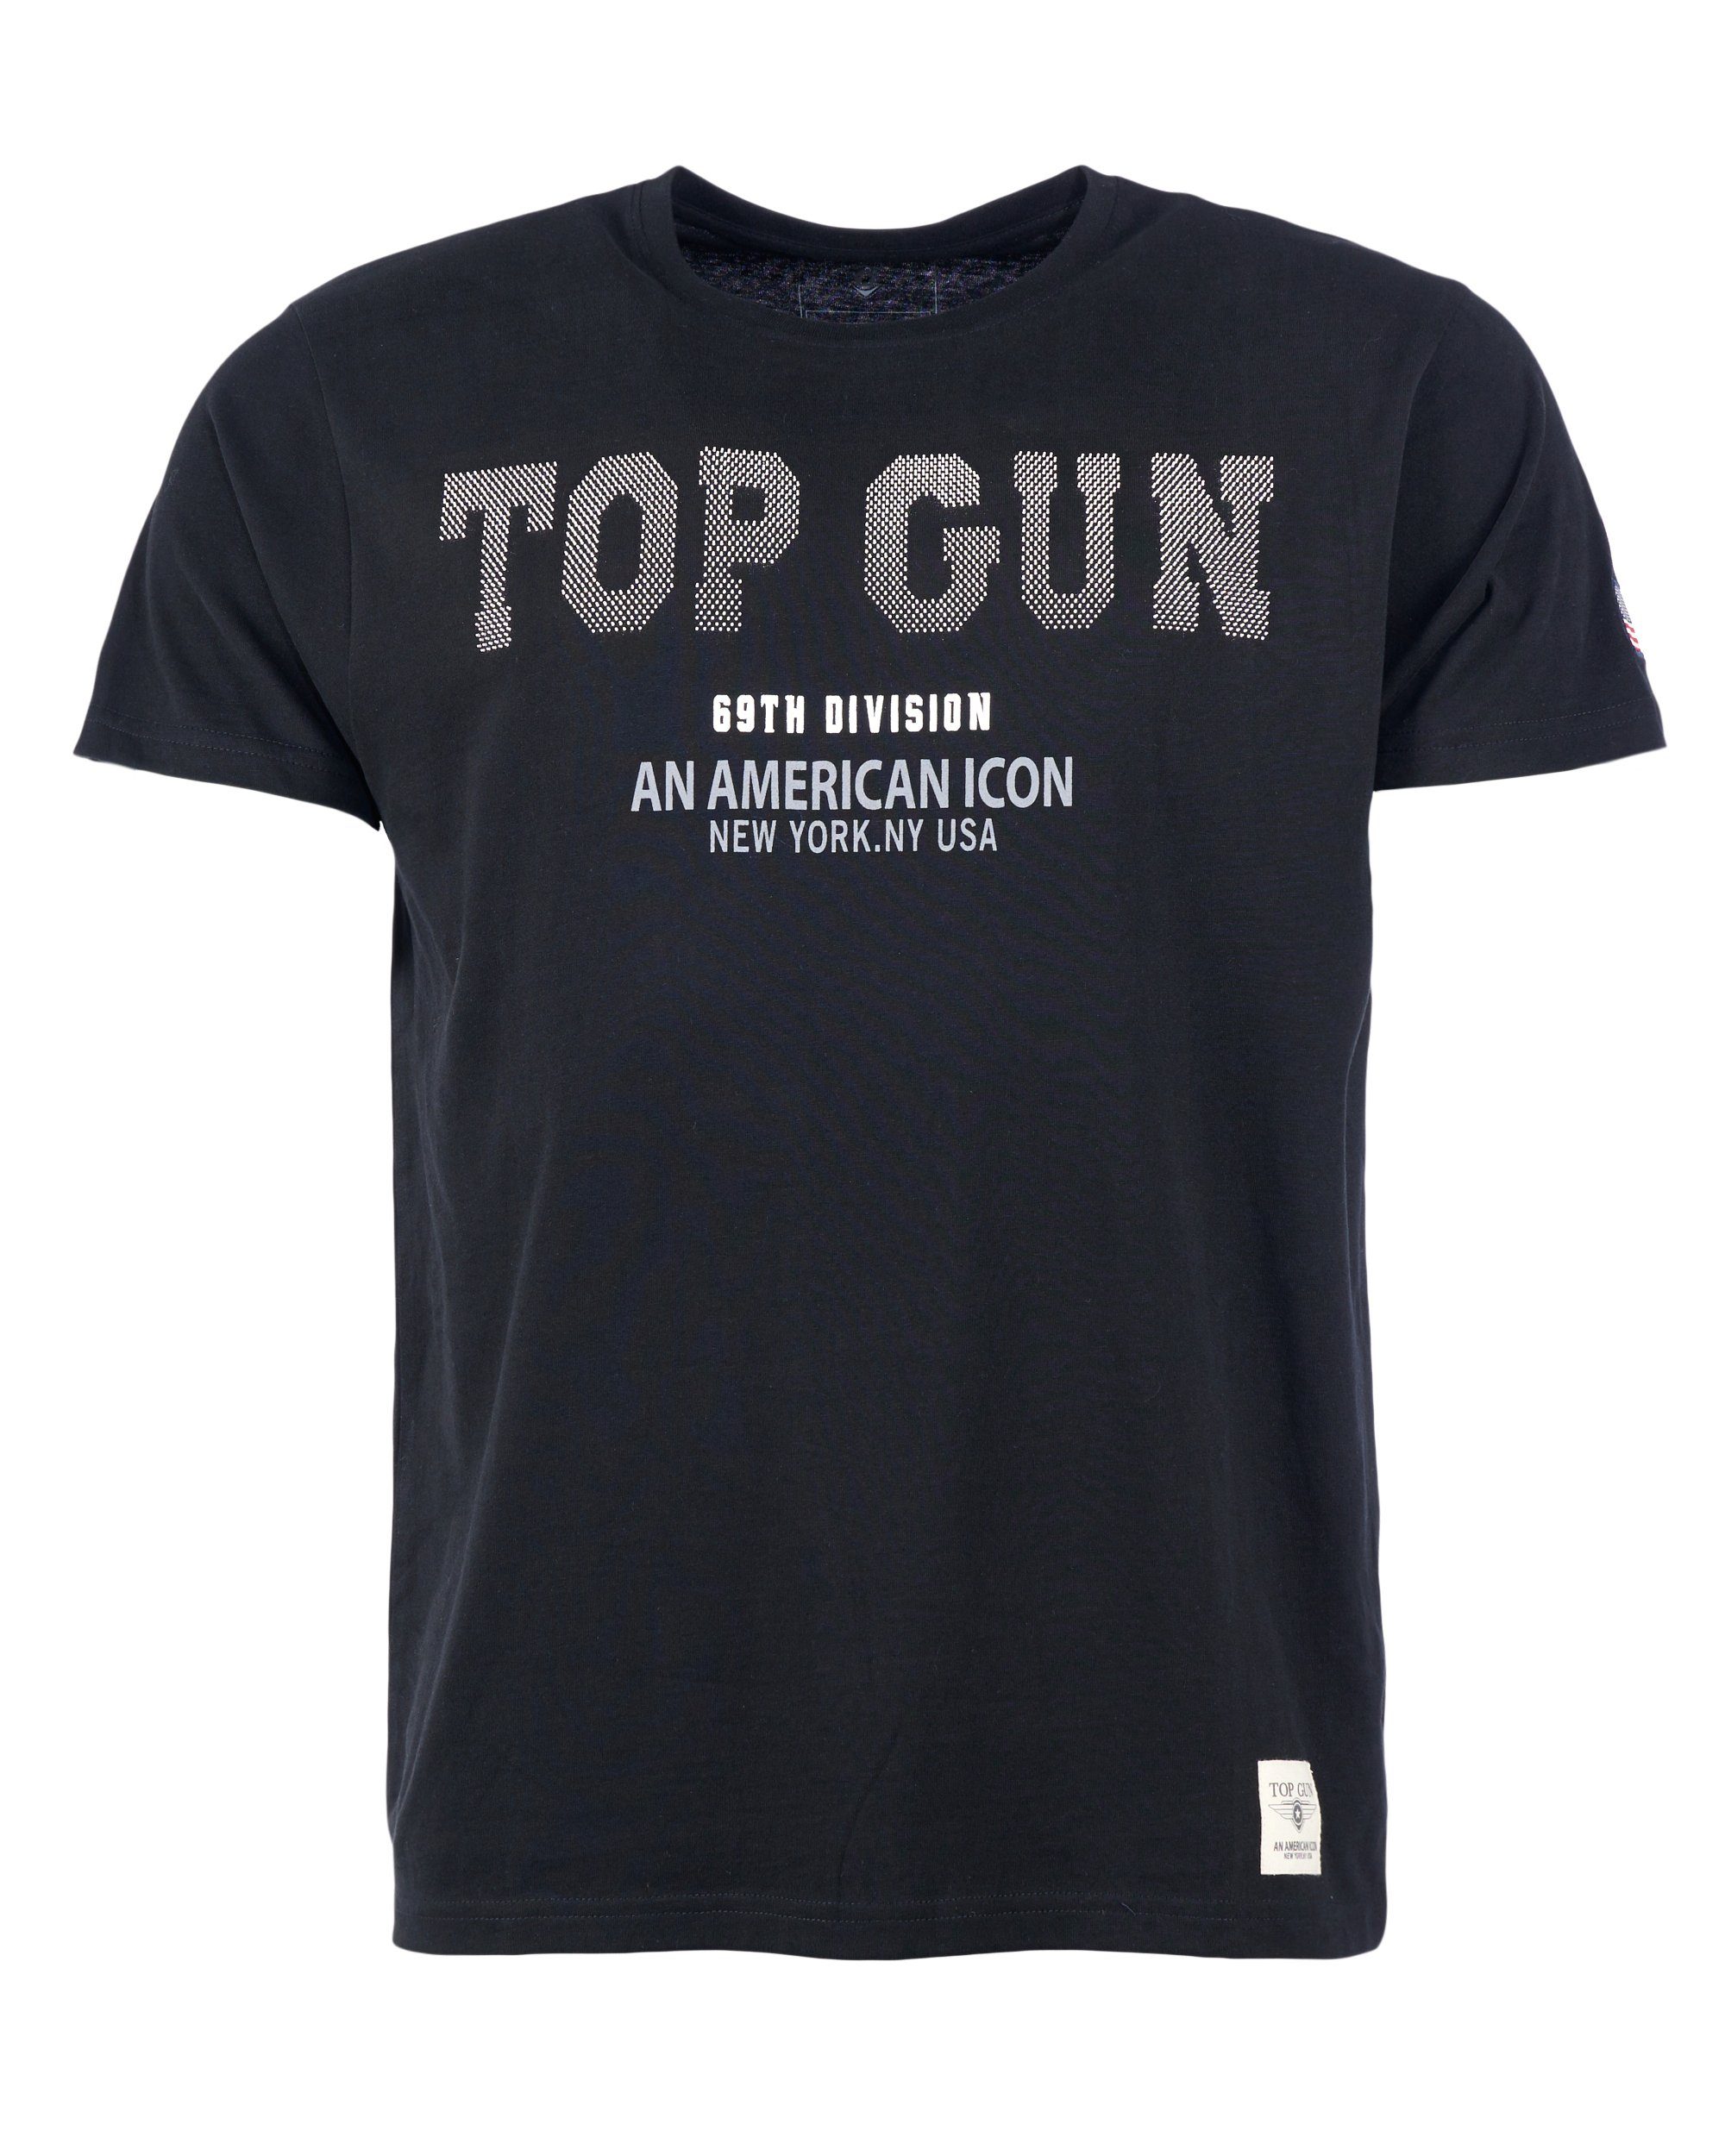 GUN TG20213006 black T-Shirt TOP